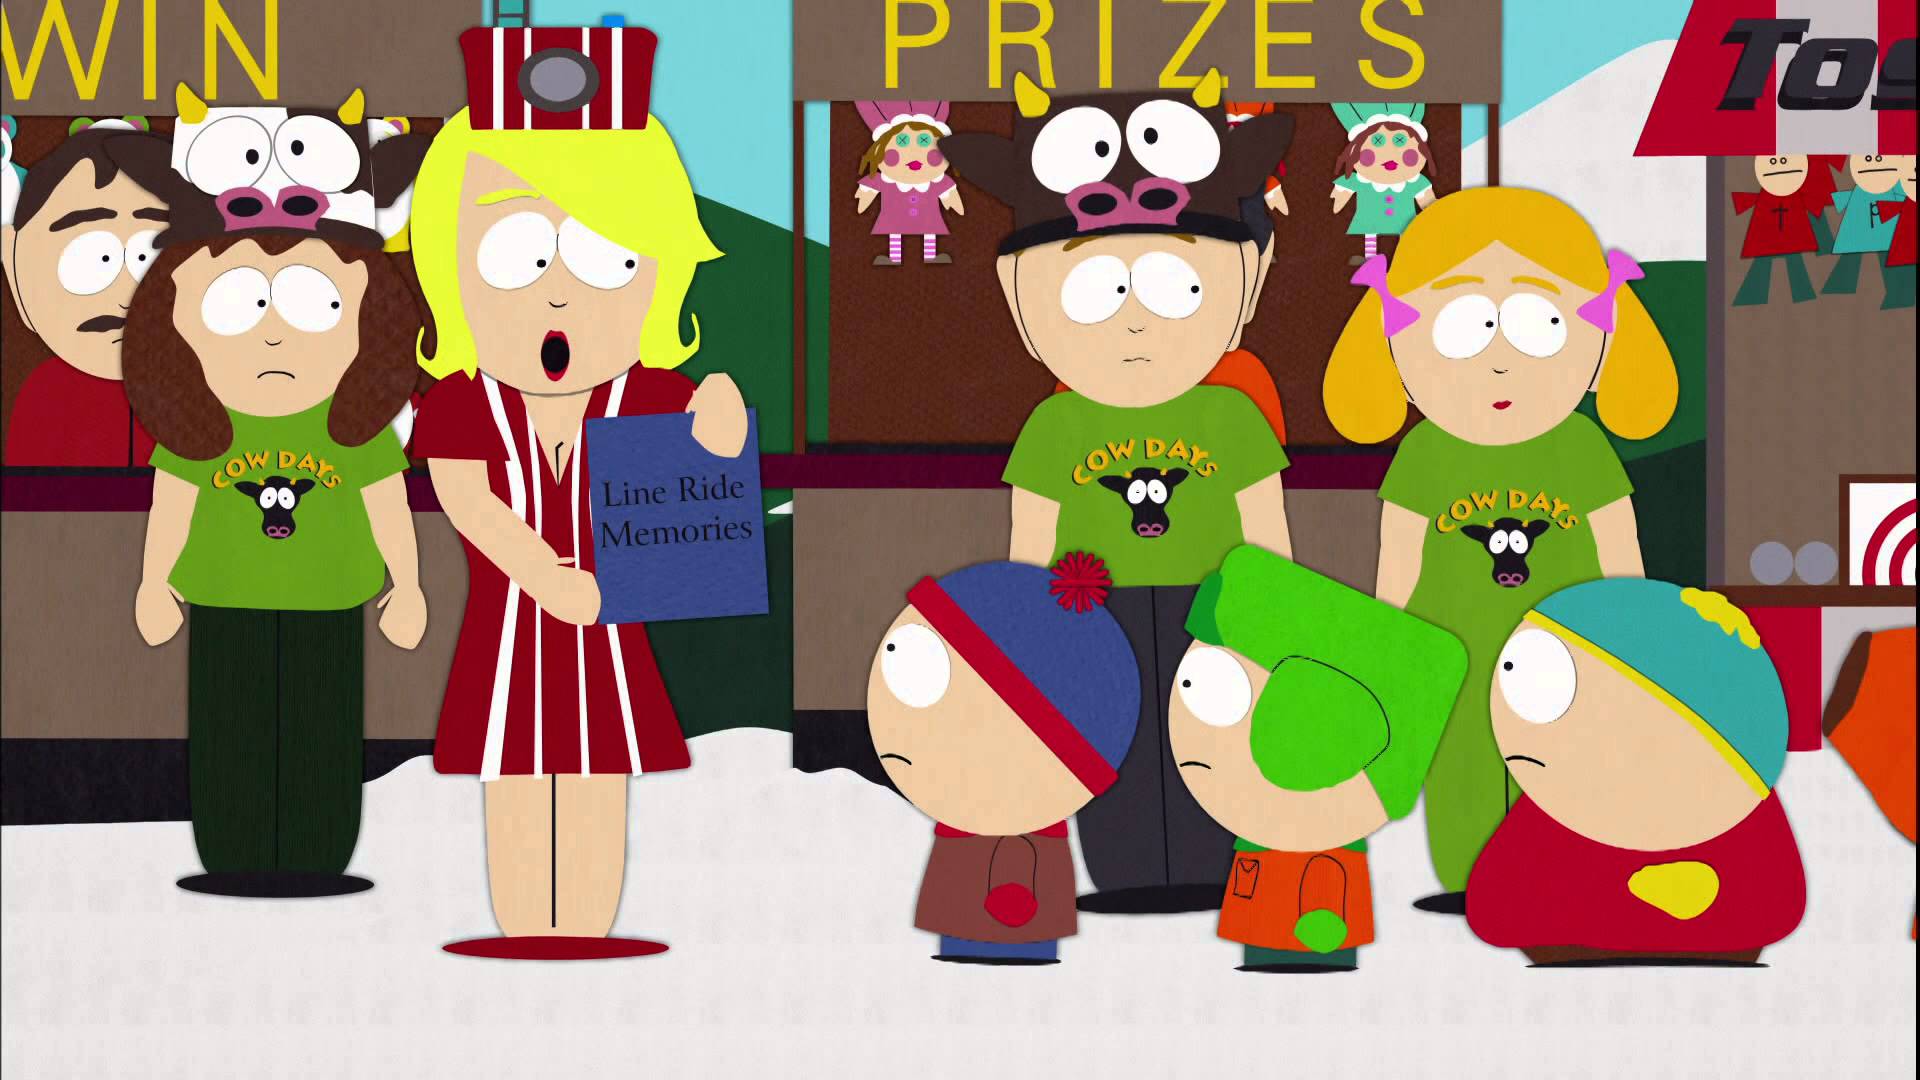 South Park The Streaming Wars Part 2 (2022) – Movie Reviews Simbasible